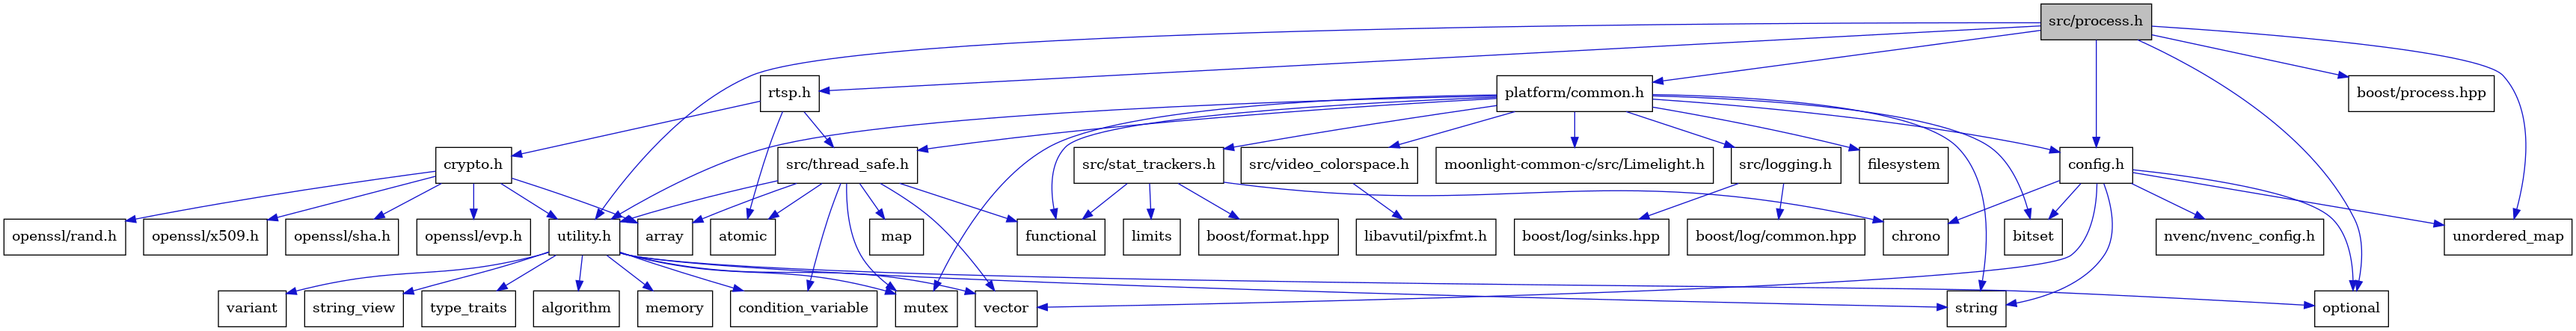 digraph {
    graph [bgcolor="#00000000"]
    node [shape=rectangle style=filled fillcolor="#FFFFFF" font=Helvetica padding=2]
    edge [color="#1414CE"]
    "23" [label="atomic" tooltip="atomic"]
    "18" [label="src/stat_trackers.h" tooltip="src/stat_trackers.h"]
    "13" [label="functional" tooltip="functional"]
    "19" [label="limits" tooltip="limits"]
    "17" [label="boost/log/sinks.hpp" tooltip="boost/log/sinks.hpp"]
    "38" [label="openssl/rand.h" tooltip="openssl/rand.h"]
    "12" [label="filesystem" tooltip="filesystem"]
    "31" [label="variant" tooltip="variant"]
    "40" [label="openssl/x509.h" tooltip="openssl/x509.h"]
    "20" [label="boost/format.hpp" tooltip="boost/format.hpp"]
    "39" [label="openssl/sha.h" tooltip="openssl/sha.h"]
    "8" [label="string" tooltip="string"]
    "25" [label="map" tooltip="map"]
    "35" [label="rtsp.h" tooltip="rtsp.h"]
    "26" [label="utility.h" tooltip="utility.h"]
    "5" [label="config.h" tooltip="config.h"]
    "11" [label="platform/common.h" tooltip="platform/common.h"]
    "29" [label="string_view" tooltip="string_view"]
    "24" [label="condition_variable" tooltip="condition_variable"]
    "32" [label="src/video_colorspace.h" tooltip="src/video_colorspace.h"]
    "10" [label="nvenc/nvenc_config.h" tooltip="nvenc/nvenc_config.h"]
    "6" [label="bitset" tooltip="bitset"]
    "33" [label="libavutil/pixfmt.h" tooltip="libavutil/pixfmt.h"]
    "2" [label="optional" tooltip="optional"]
    "9" [label="vector" tooltip="vector"]
    "1" [label="src/process.h" tooltip="src/process.h" fillcolor="#BFBFBF"]
    "22" [label="array" tooltip="array"]
    "4" [label="boost/process.hpp" tooltip="boost/process.hpp"]
    "15" [label="src/logging.h" tooltip="src/logging.h"]
    "37" [label="openssl/evp.h" tooltip="openssl/evp.h"]
    "3" [label="unordered_map" tooltip="unordered_map"]
    "14" [label="mutex" tooltip="mutex"]
    "7" [label="chrono" tooltip="chrono"]
    "36" [label="crypto.h" tooltip="crypto.h"]
    "30" [label="type_traits" tooltip="type_traits"]
    "34" [label="moonlight-common-c/src/Limelight.h" tooltip="moonlight-common-c/src/Limelight.h"]
    "16" [label="boost/log/common.hpp" tooltip="boost/log/common.hpp"]
    "27" [label="algorithm" tooltip="algorithm"]
    "28" [label="memory" tooltip="memory"]
    "21" [label="src/thread_safe.h" tooltip="src/thread_safe.h"]
    "18" -> "7" [dir=forward tooltip="include"]
    "18" -> "13" [dir=forward tooltip="include"]
    "18" -> "19" [dir=forward tooltip="include"]
    "18" -> "20" [dir=forward tooltip="include"]
    "35" -> "23" [dir=forward tooltip="include"]
    "35" -> "36" [dir=forward tooltip="include"]
    "35" -> "21" [dir=forward tooltip="include"]
    "26" -> "27" [dir=forward tooltip="include"]
    "26" -> "24" [dir=forward tooltip="include"]
    "26" -> "28" [dir=forward tooltip="include"]
    "26" -> "14" [dir=forward tooltip="include"]
    "26" -> "2" [dir=forward tooltip="include"]
    "26" -> "8" [dir=forward tooltip="include"]
    "26" -> "29" [dir=forward tooltip="include"]
    "26" -> "30" [dir=forward tooltip="include"]
    "26" -> "31" [dir=forward tooltip="include"]
    "26" -> "9" [dir=forward tooltip="include"]
    "5" -> "6" [dir=forward tooltip="include"]
    "5" -> "7" [dir=forward tooltip="include"]
    "5" -> "2" [dir=forward tooltip="include"]
    "5" -> "8" [dir=forward tooltip="include"]
    "5" -> "3" [dir=forward tooltip="include"]
    "5" -> "9" [dir=forward tooltip="include"]
    "5" -> "10" [dir=forward tooltip="include"]
    "11" -> "6" [dir=forward tooltip="include"]
    "11" -> "12" [dir=forward tooltip="include"]
    "11" -> "13" [dir=forward tooltip="include"]
    "11" -> "14" [dir=forward tooltip="include"]
    "11" -> "8" [dir=forward tooltip="include"]
    "11" -> "5" [dir=forward tooltip="include"]
    "11" -> "15" [dir=forward tooltip="include"]
    "11" -> "18" [dir=forward tooltip="include"]
    "11" -> "21" [dir=forward tooltip="include"]
    "11" -> "26" [dir=forward tooltip="include"]
    "11" -> "32" [dir=forward tooltip="include"]
    "11" -> "34" [dir=forward tooltip="include"]
    "32" -> "33" [dir=forward tooltip="include"]
    "1" -> "2" [dir=forward tooltip="include"]
    "1" -> "3" [dir=forward tooltip="include"]
    "1" -> "4" [dir=forward tooltip="include"]
    "1" -> "5" [dir=forward tooltip="include"]
    "1" -> "11" [dir=forward tooltip="include"]
    "1" -> "35" [dir=forward tooltip="include"]
    "1" -> "26" [dir=forward tooltip="include"]
    "15" -> "16" [dir=forward tooltip="include"]
    "15" -> "17" [dir=forward tooltip="include"]
    "36" -> "22" [dir=forward tooltip="include"]
    "36" -> "37" [dir=forward tooltip="include"]
    "36" -> "38" [dir=forward tooltip="include"]
    "36" -> "39" [dir=forward tooltip="include"]
    "36" -> "40" [dir=forward tooltip="include"]
    "36" -> "26" [dir=forward tooltip="include"]
    "21" -> "22" [dir=forward tooltip="include"]
    "21" -> "23" [dir=forward tooltip="include"]
    "21" -> "24" [dir=forward tooltip="include"]
    "21" -> "13" [dir=forward tooltip="include"]
    "21" -> "25" [dir=forward tooltip="include"]
    "21" -> "14" [dir=forward tooltip="include"]
    "21" -> "9" [dir=forward tooltip="include"]
    "21" -> "26" [dir=forward tooltip="include"]
}